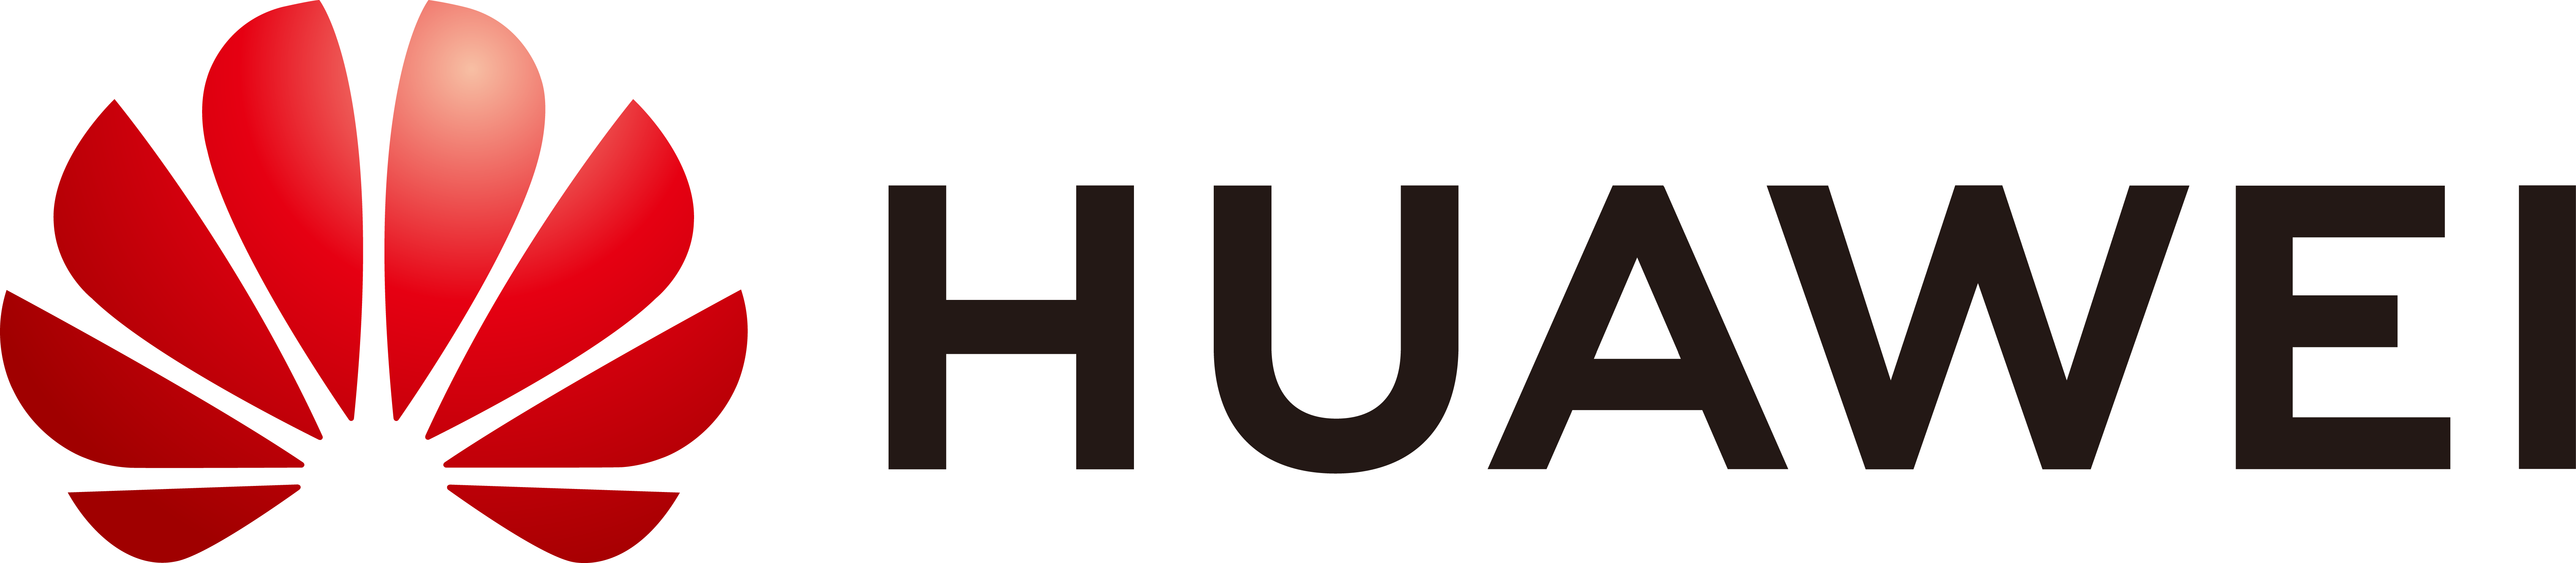 Huawei Technologies Japan K.K.